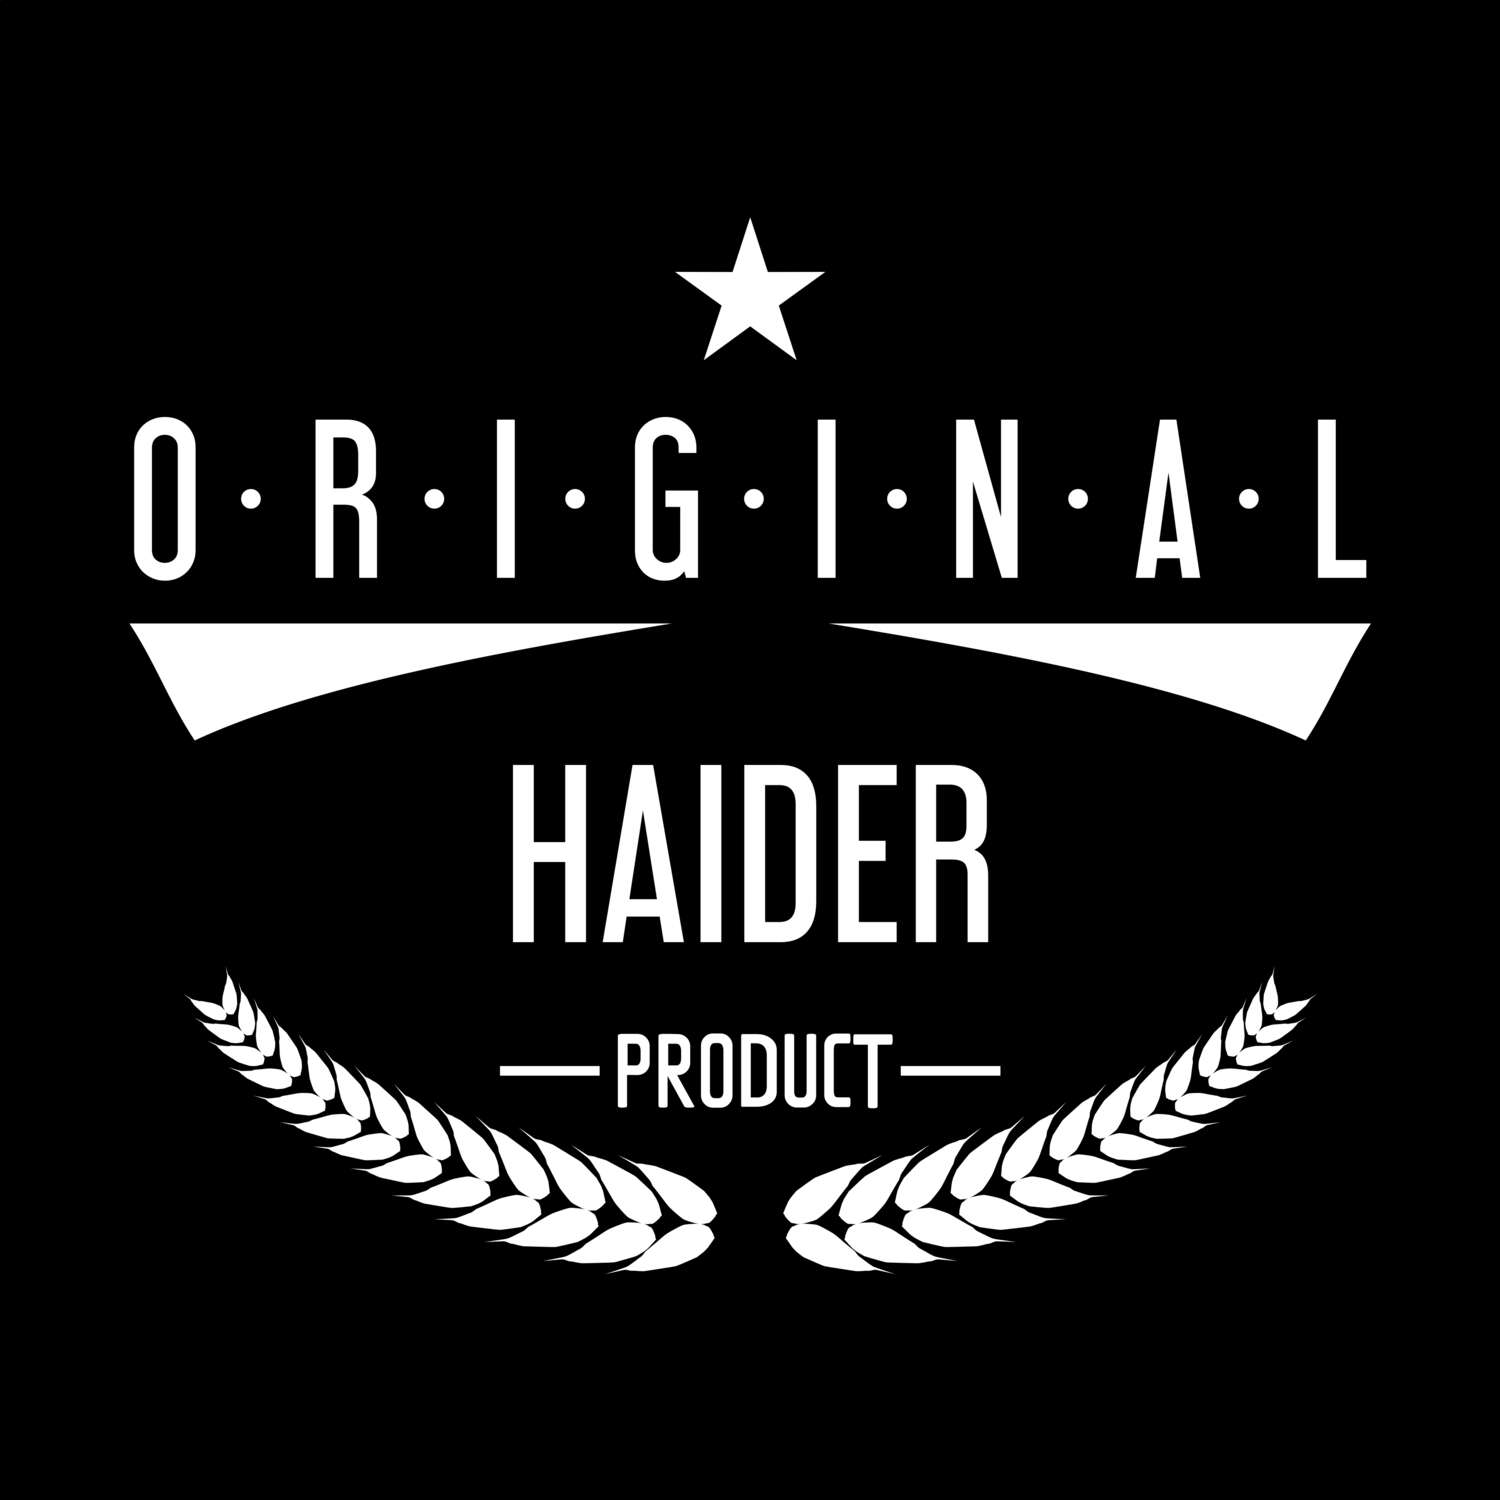 Haider T-Shirt »Original Product«